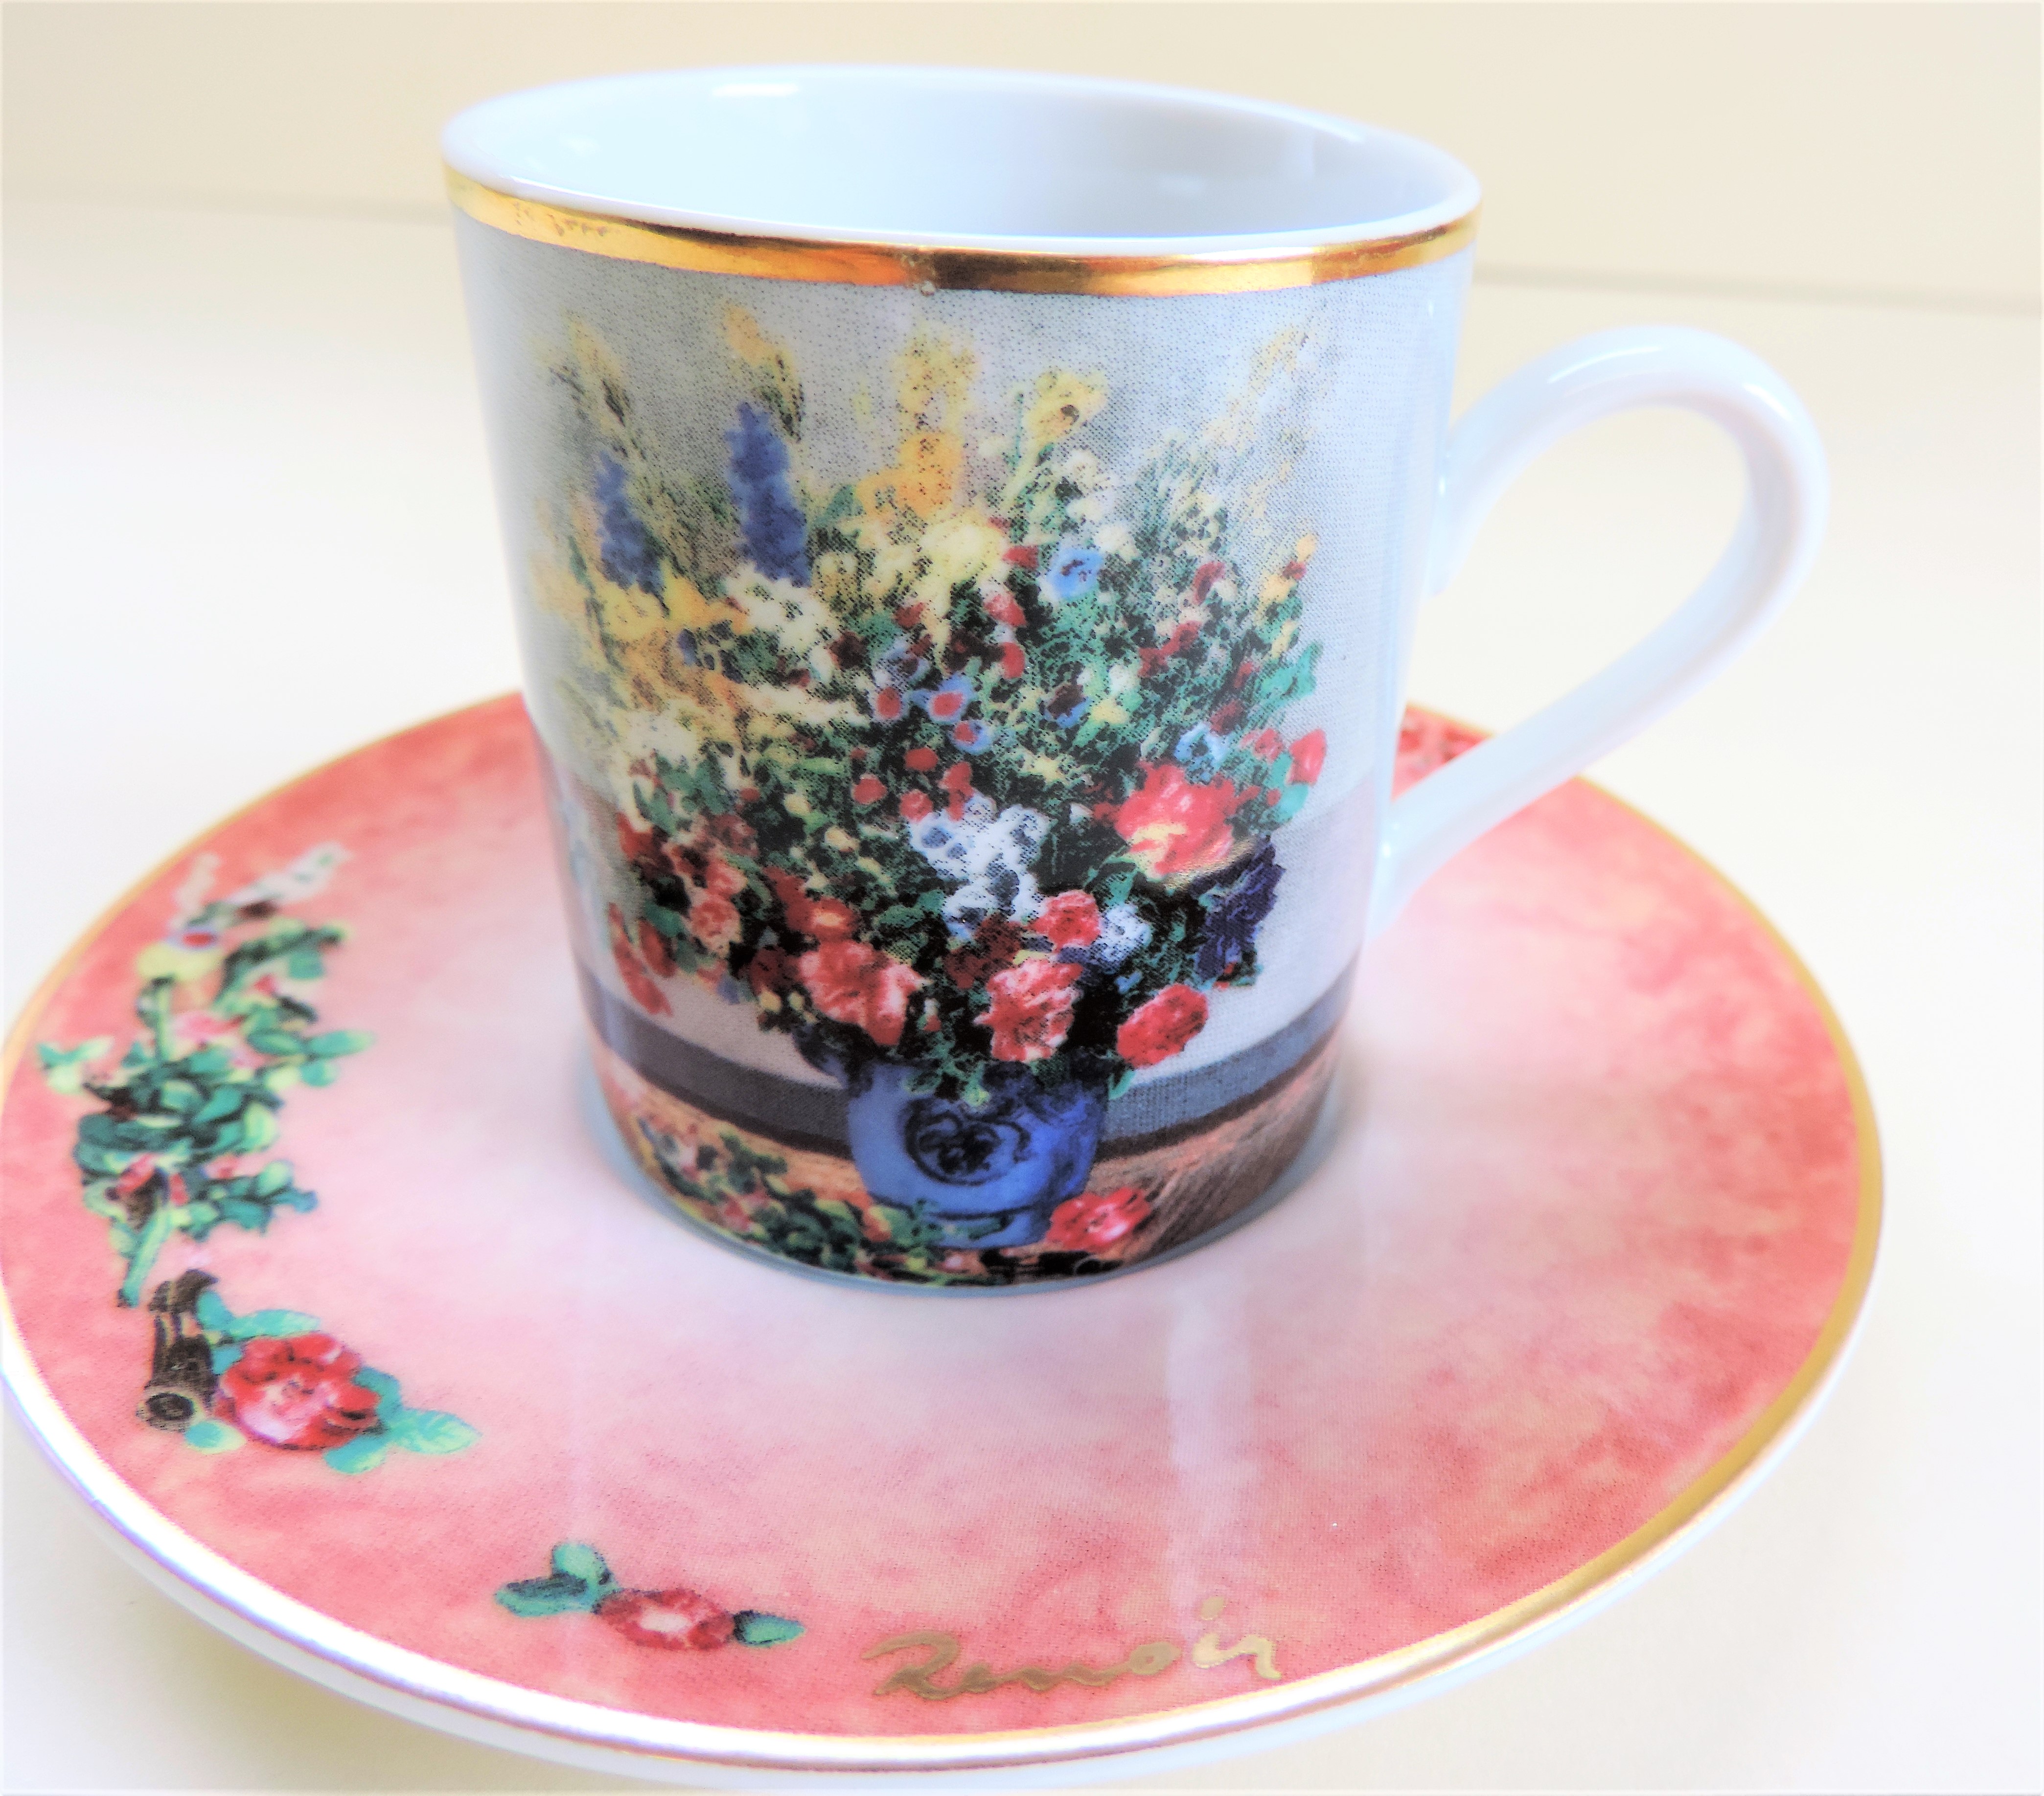 Goebel Artis Orbis Pierre Auguste Renoir Demitasse Expresso Cup & Saucer - Image 2 of 5